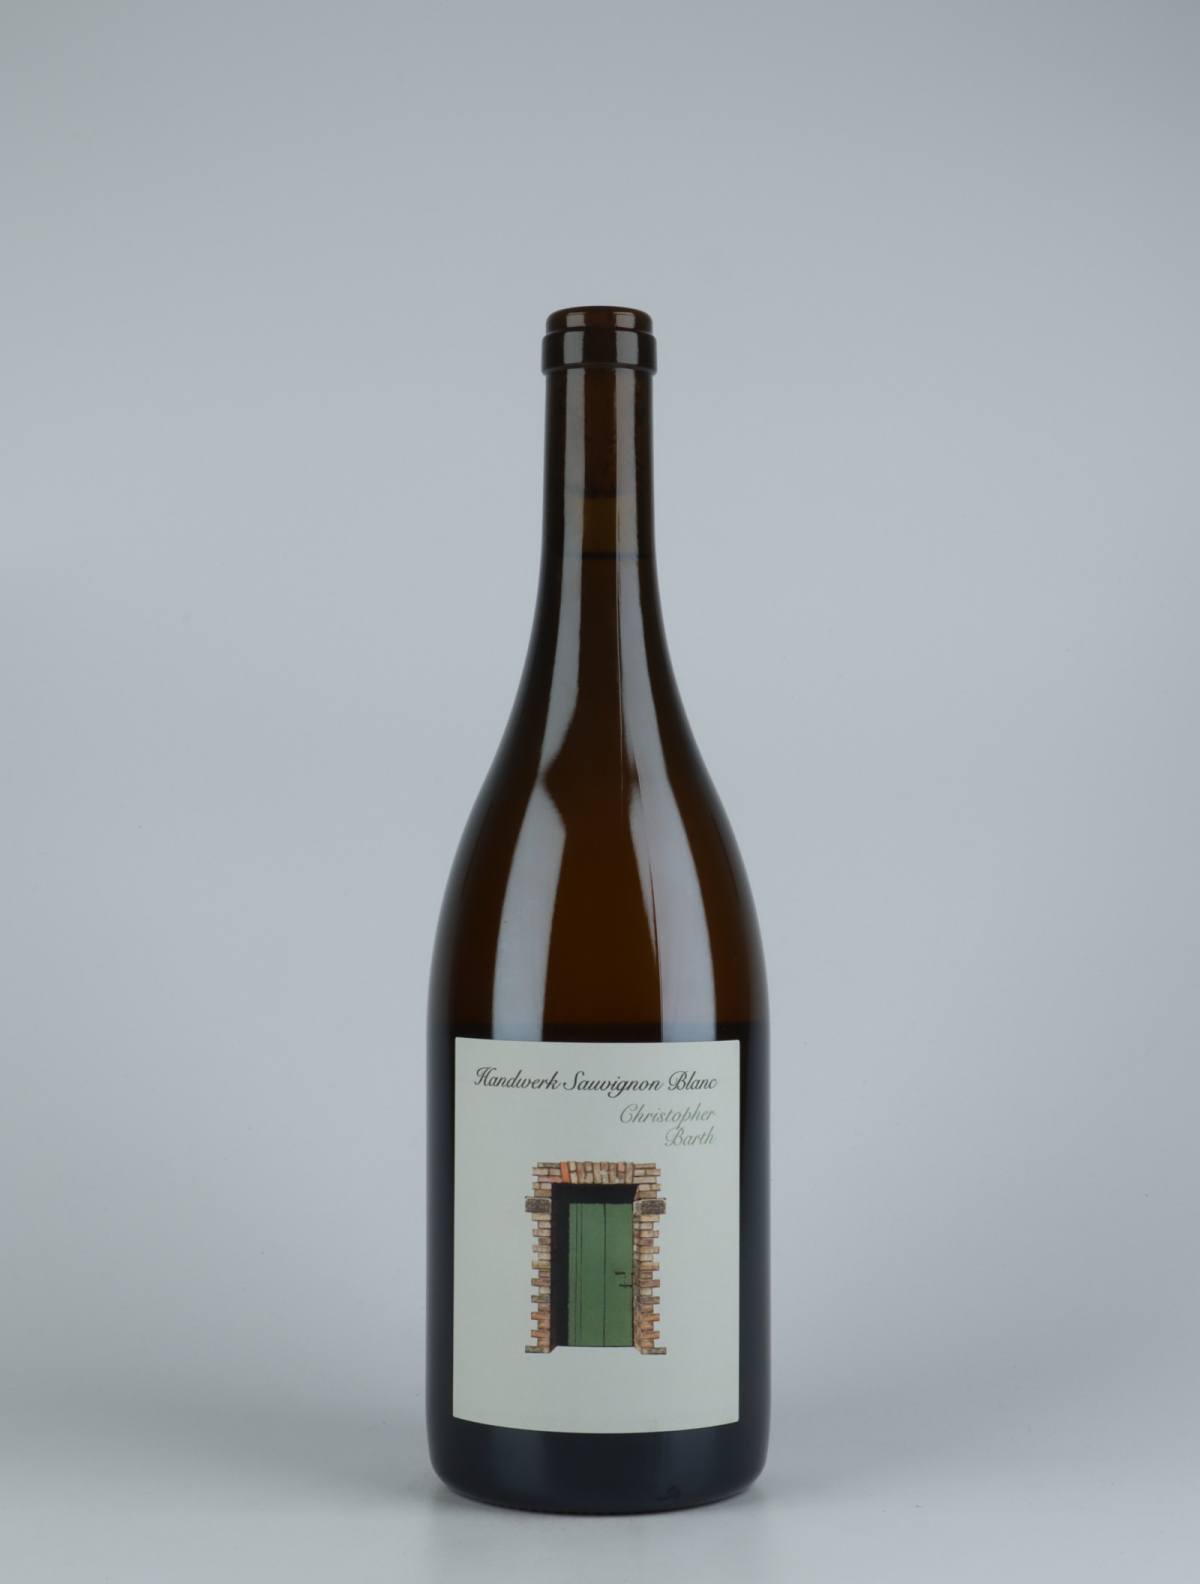 En flaske 2019 Handwerk Sauvignon Blanc Hvidvin fra Christopher Barth, Rheinhessen i Tyskland